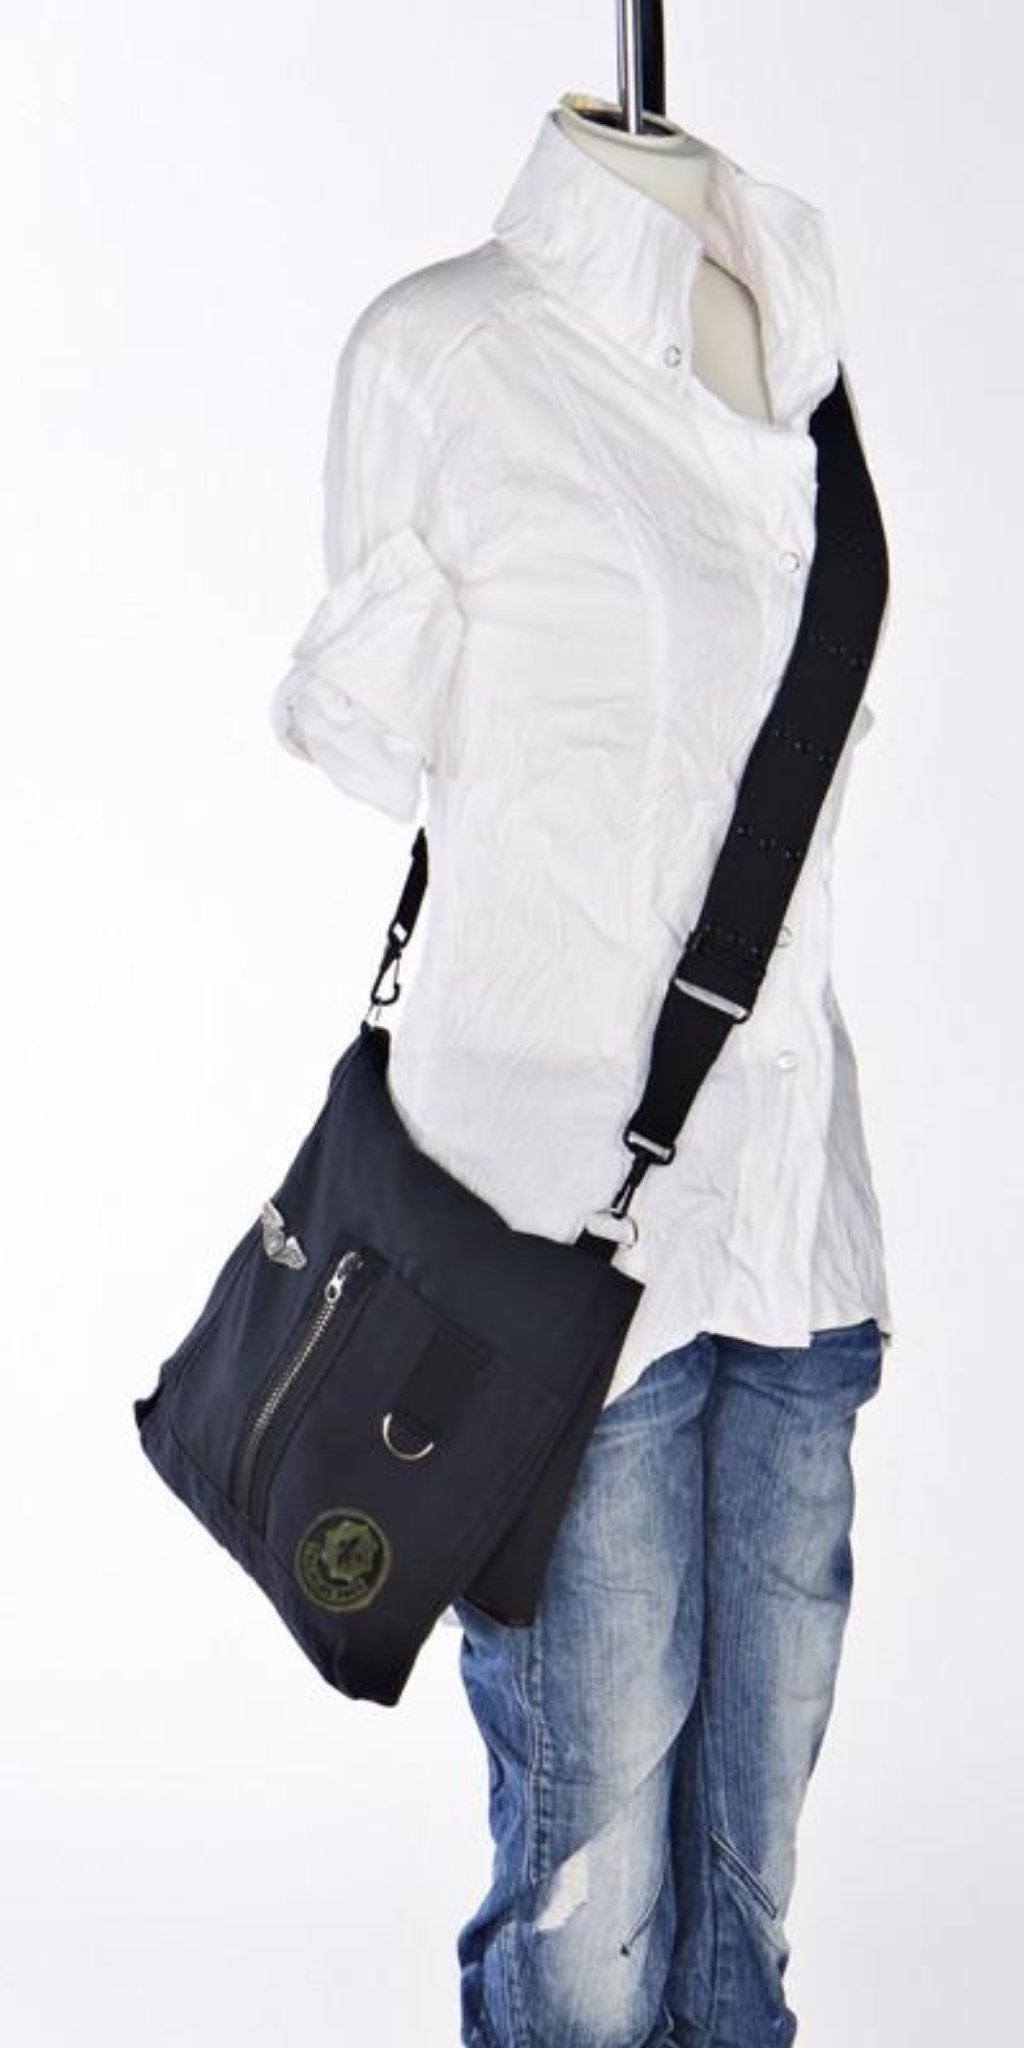 Louiswill Women Shoulder Bag Soft PU Large Capacity Crossbody Bag